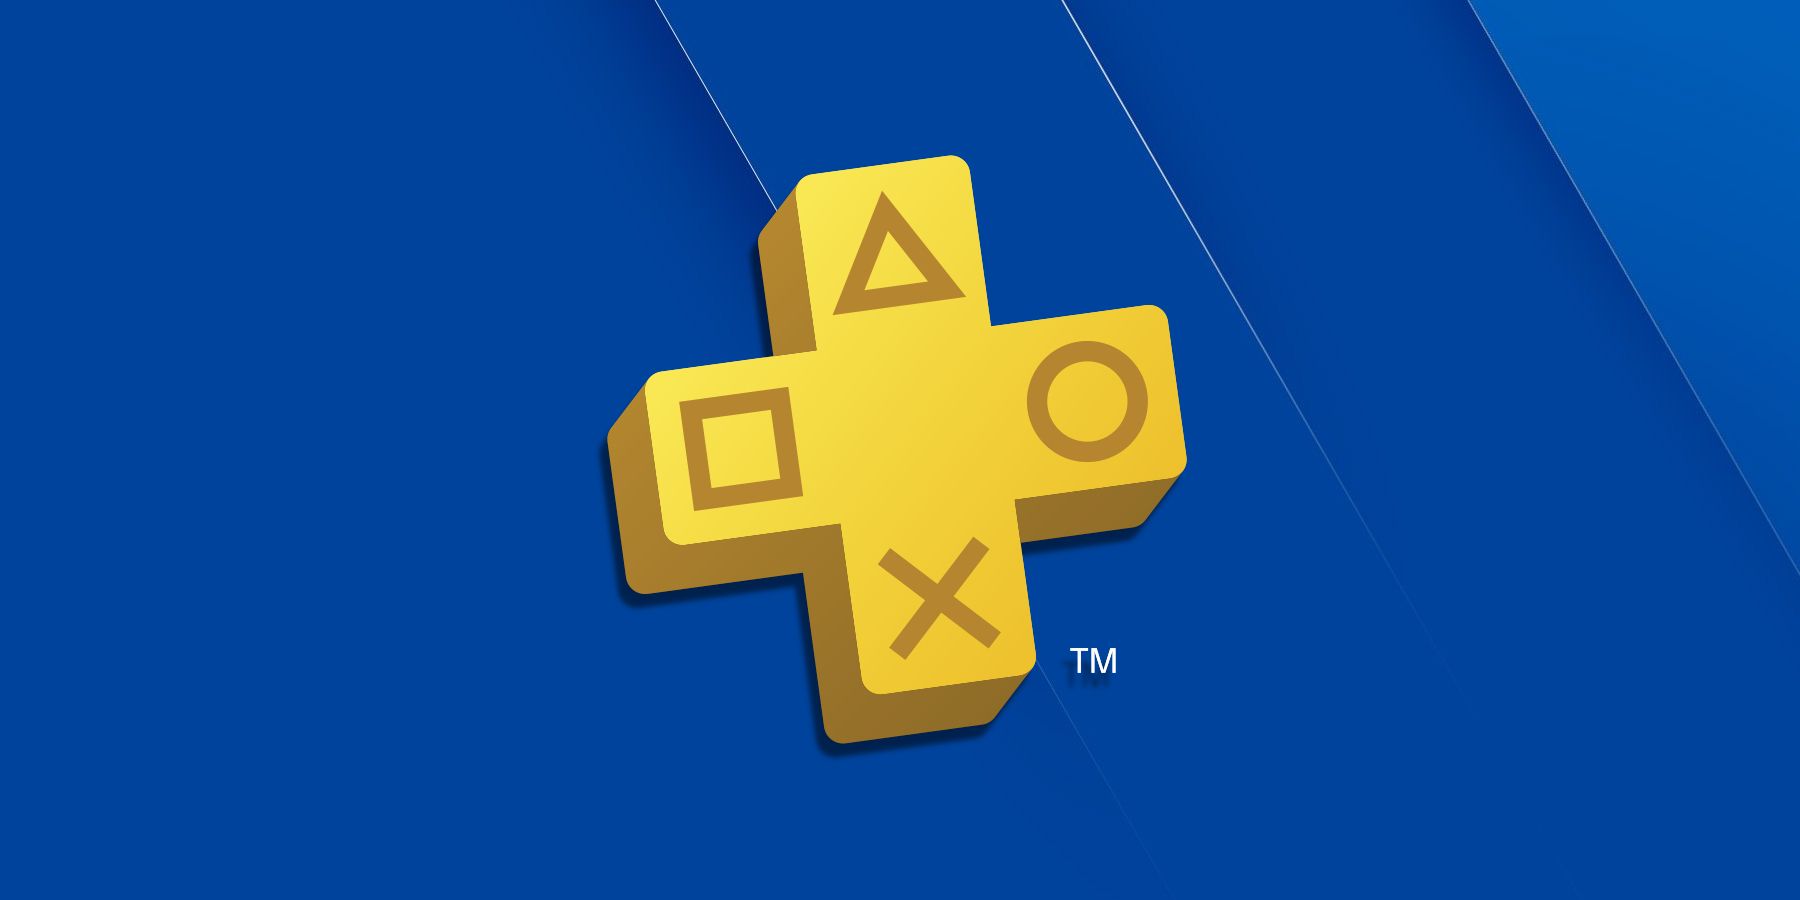 September PlayStation Plus: FREE games, AC Origins, more